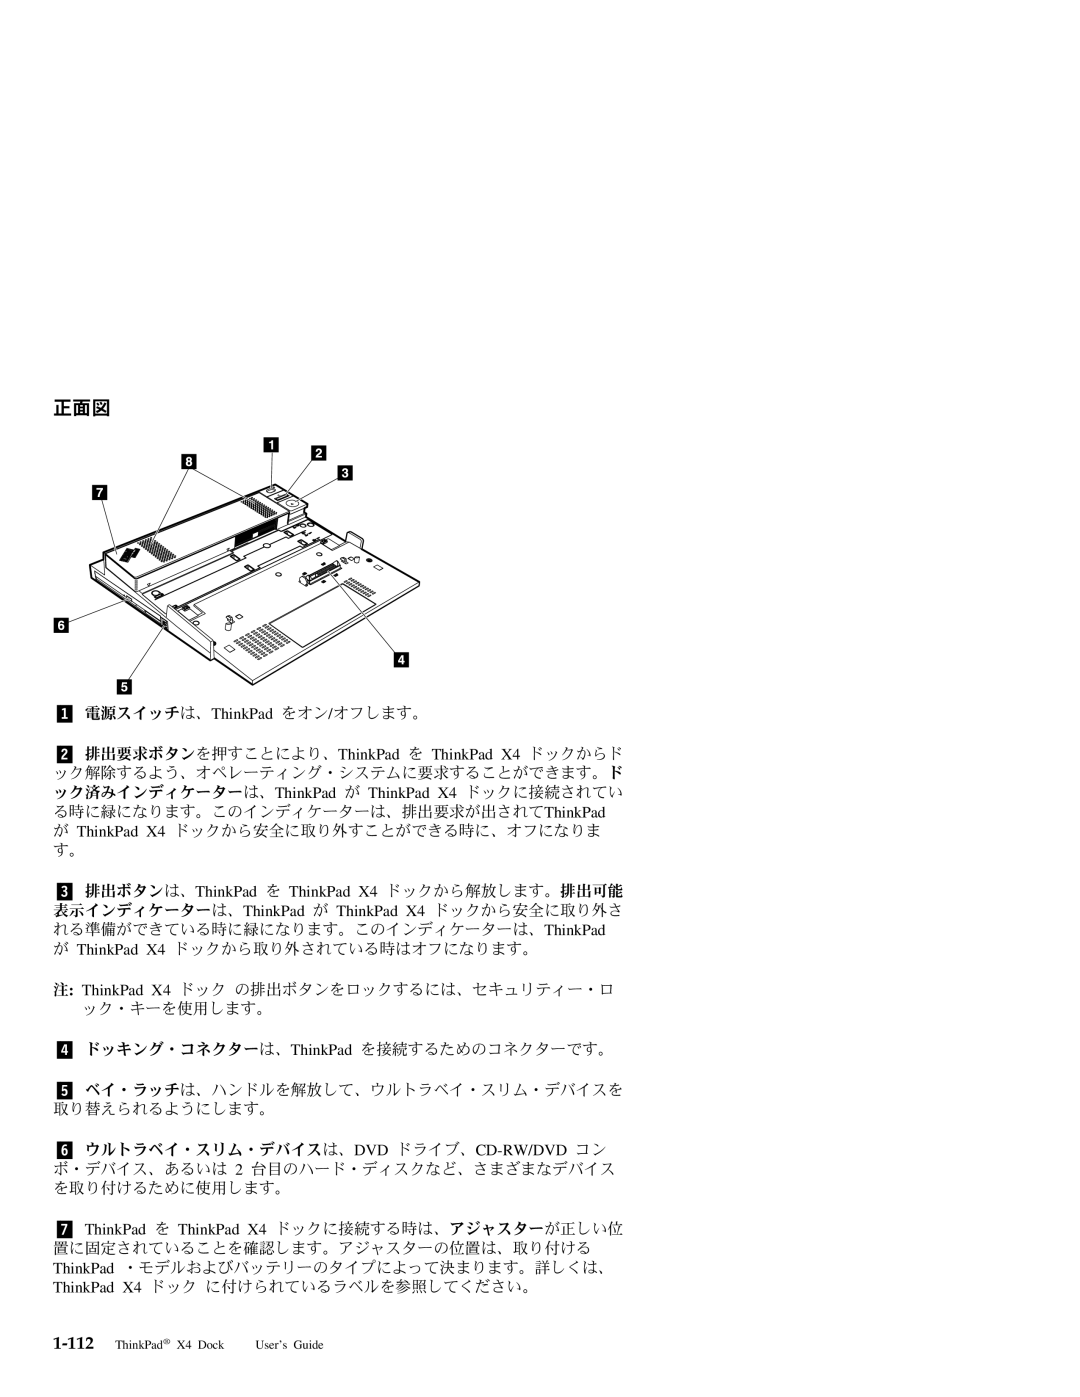 IBM X4 manual 